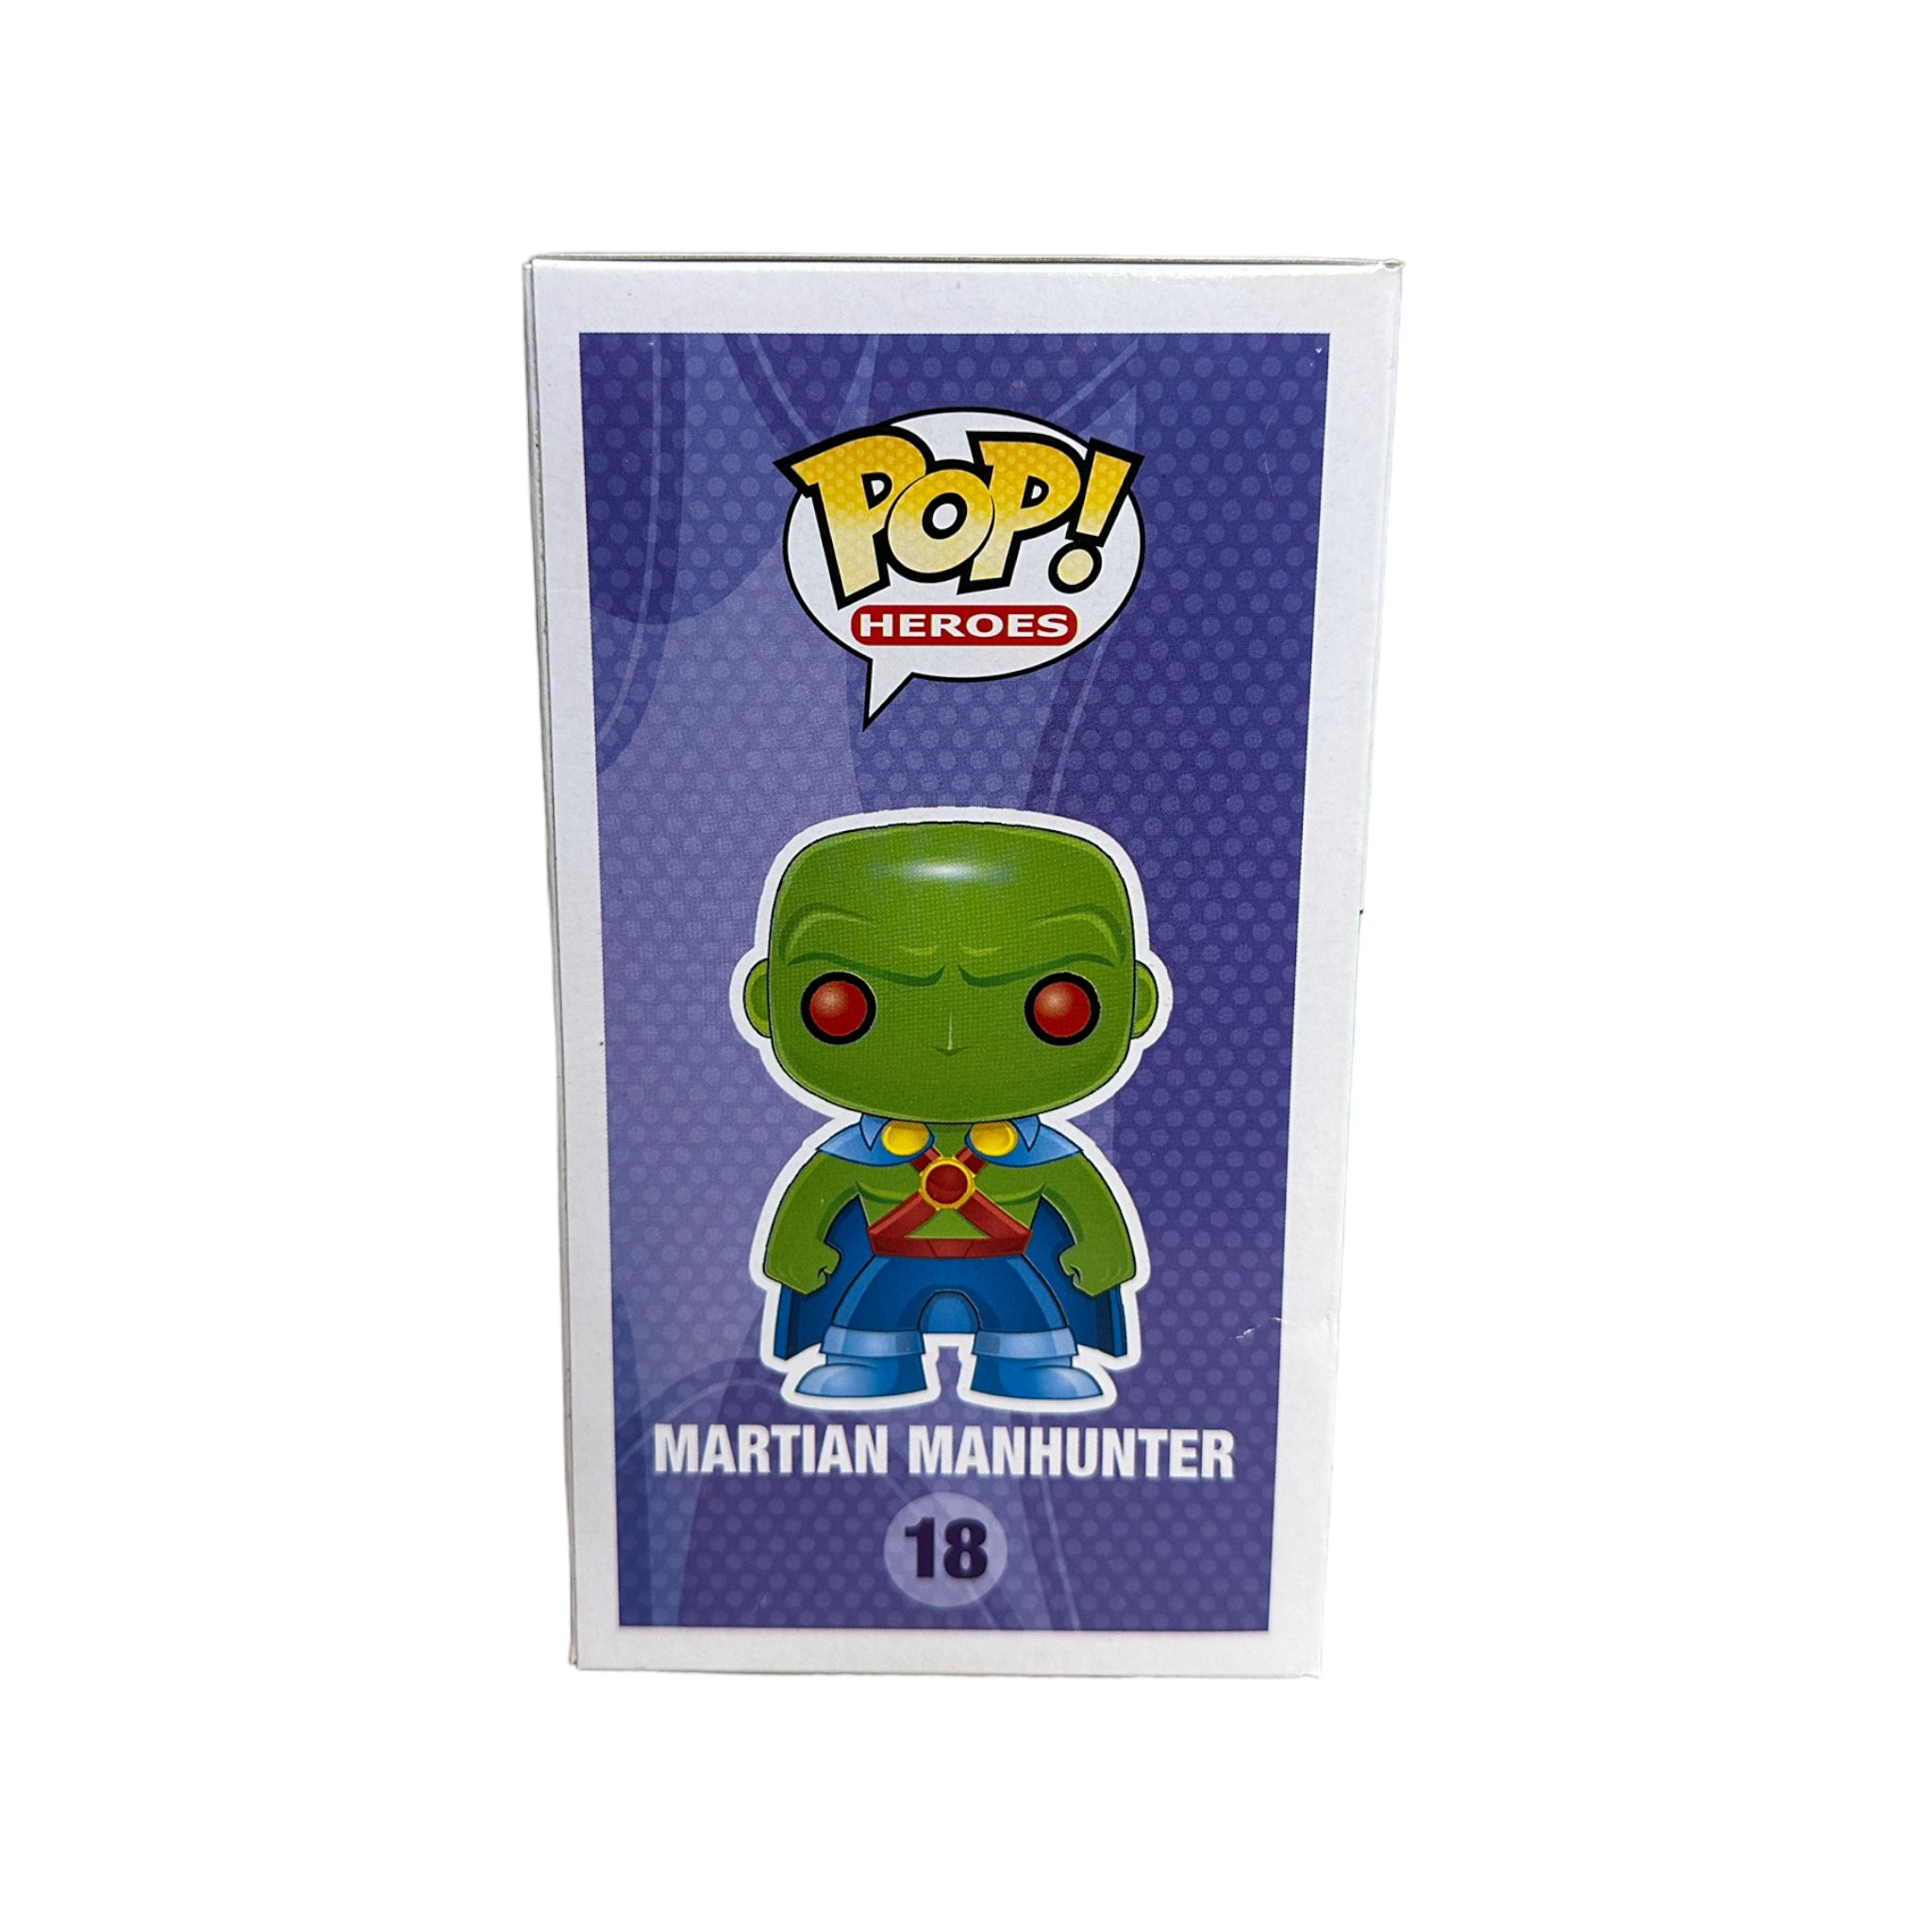 Martian Manhunter #18 (Metallic) Funko Pop! - DC Universe - SDCC 2011 Exclusive LE480 Pcs - Condition 7/10